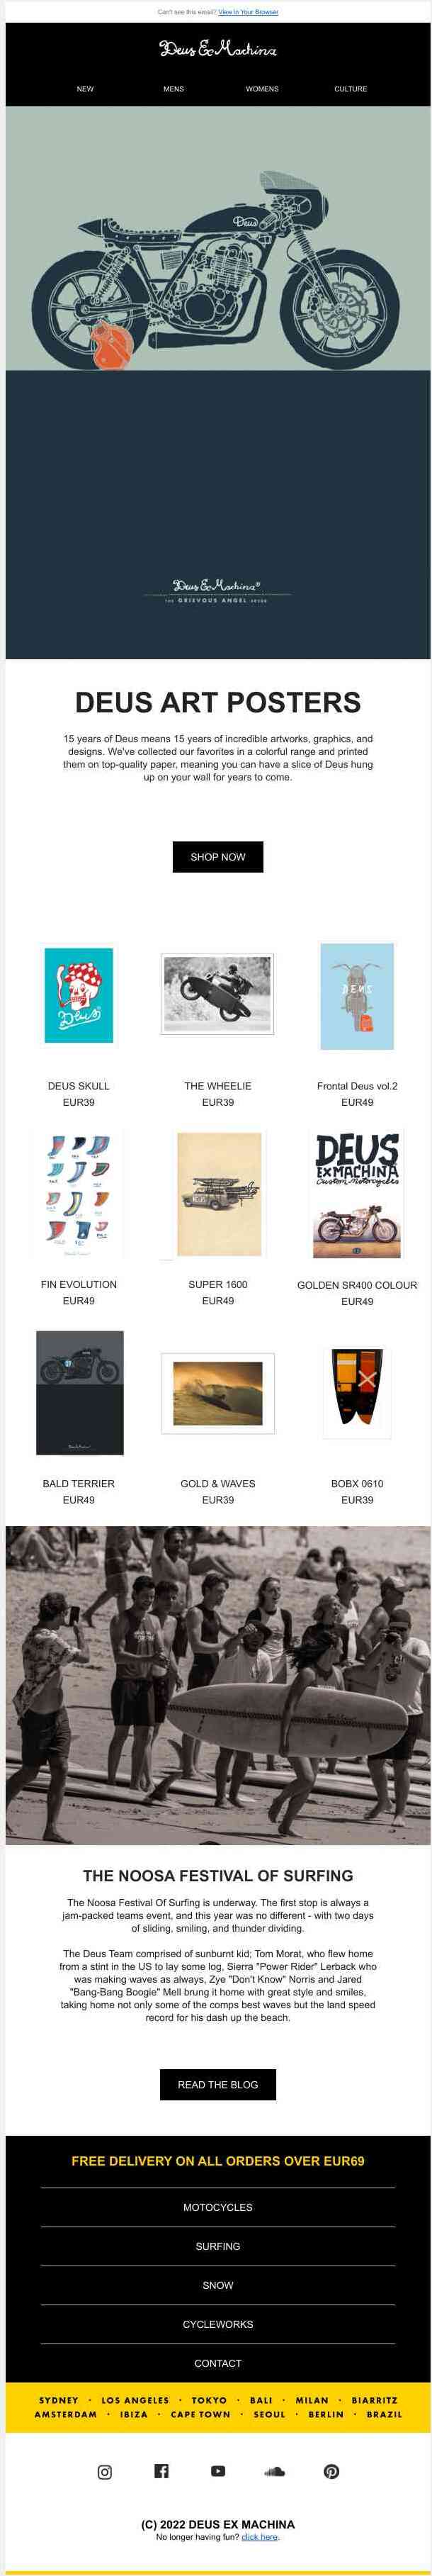 Deus Art Posters - Dress Up Your Walls